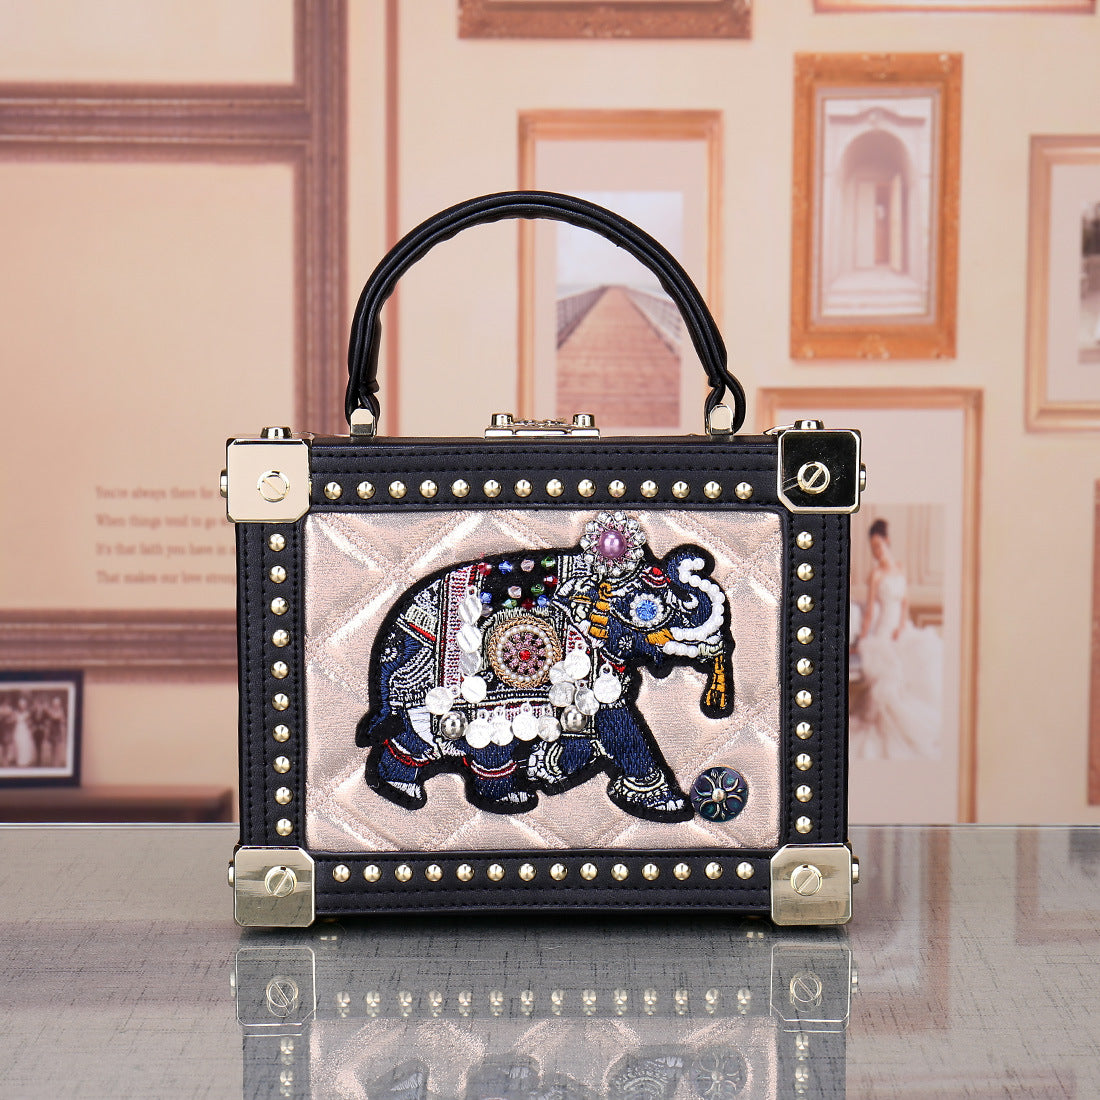 Abstract Embroidery Elephant Square Handbag/Cross-Body Bag